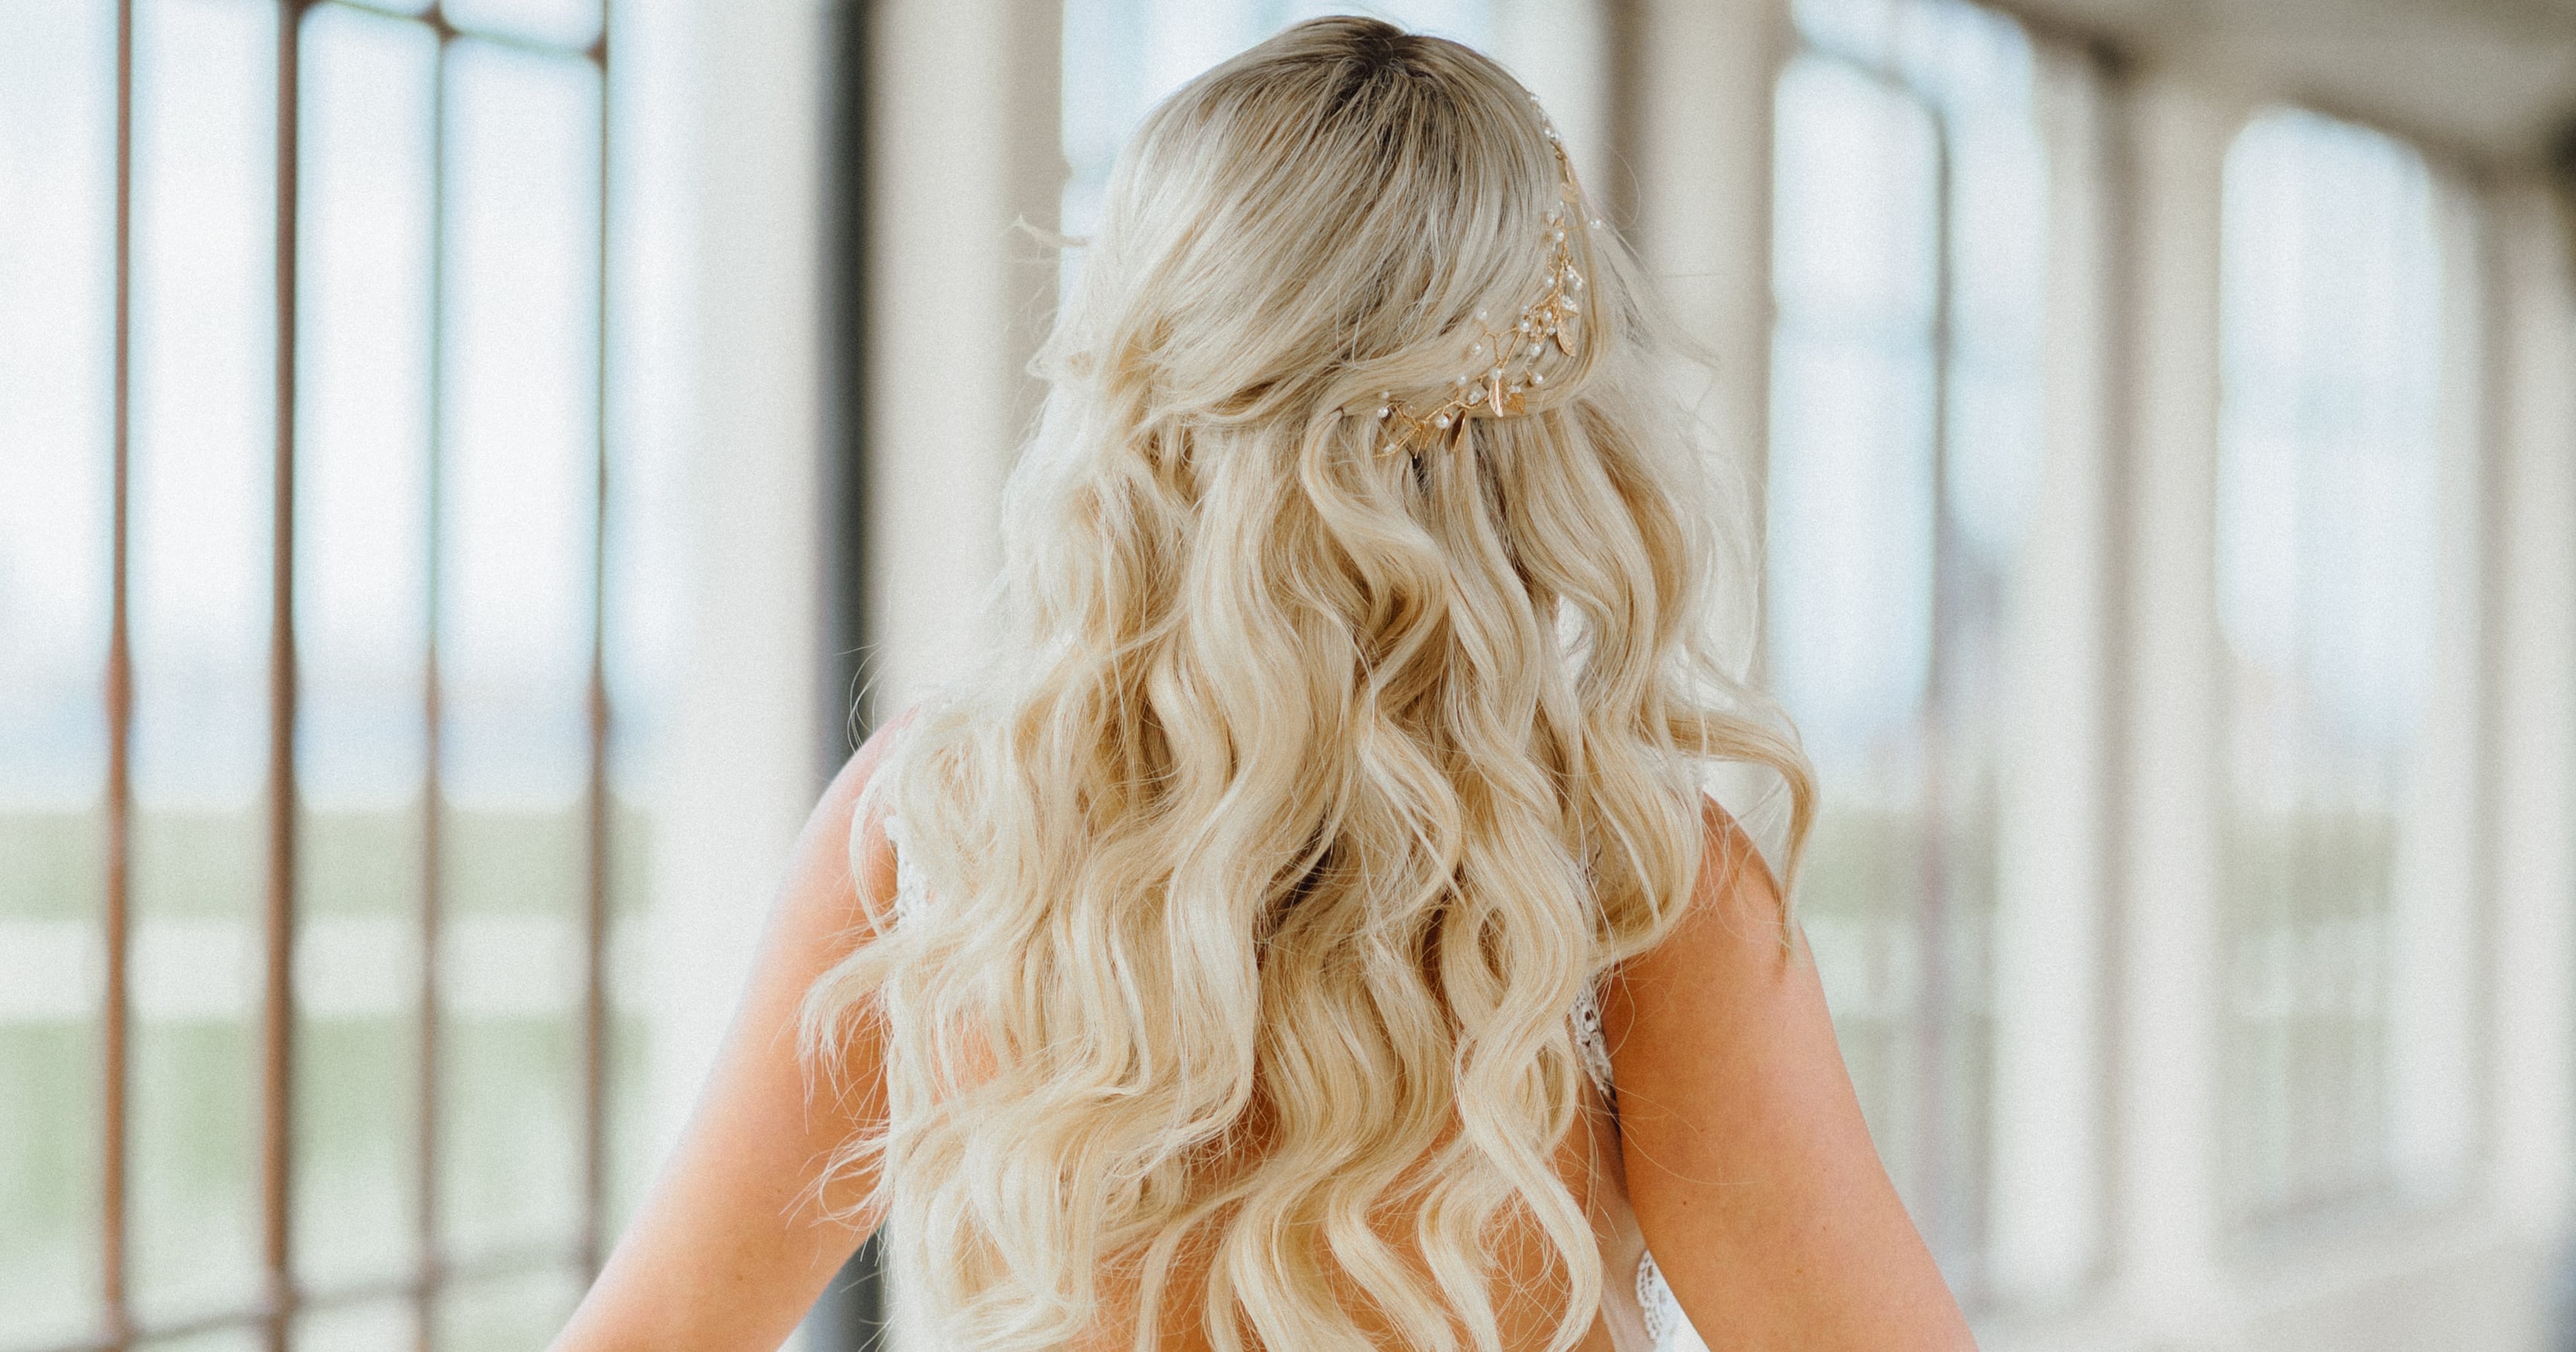 34 Gorgeous Short Wedding Hairstyles and Bridal Hair Ideas